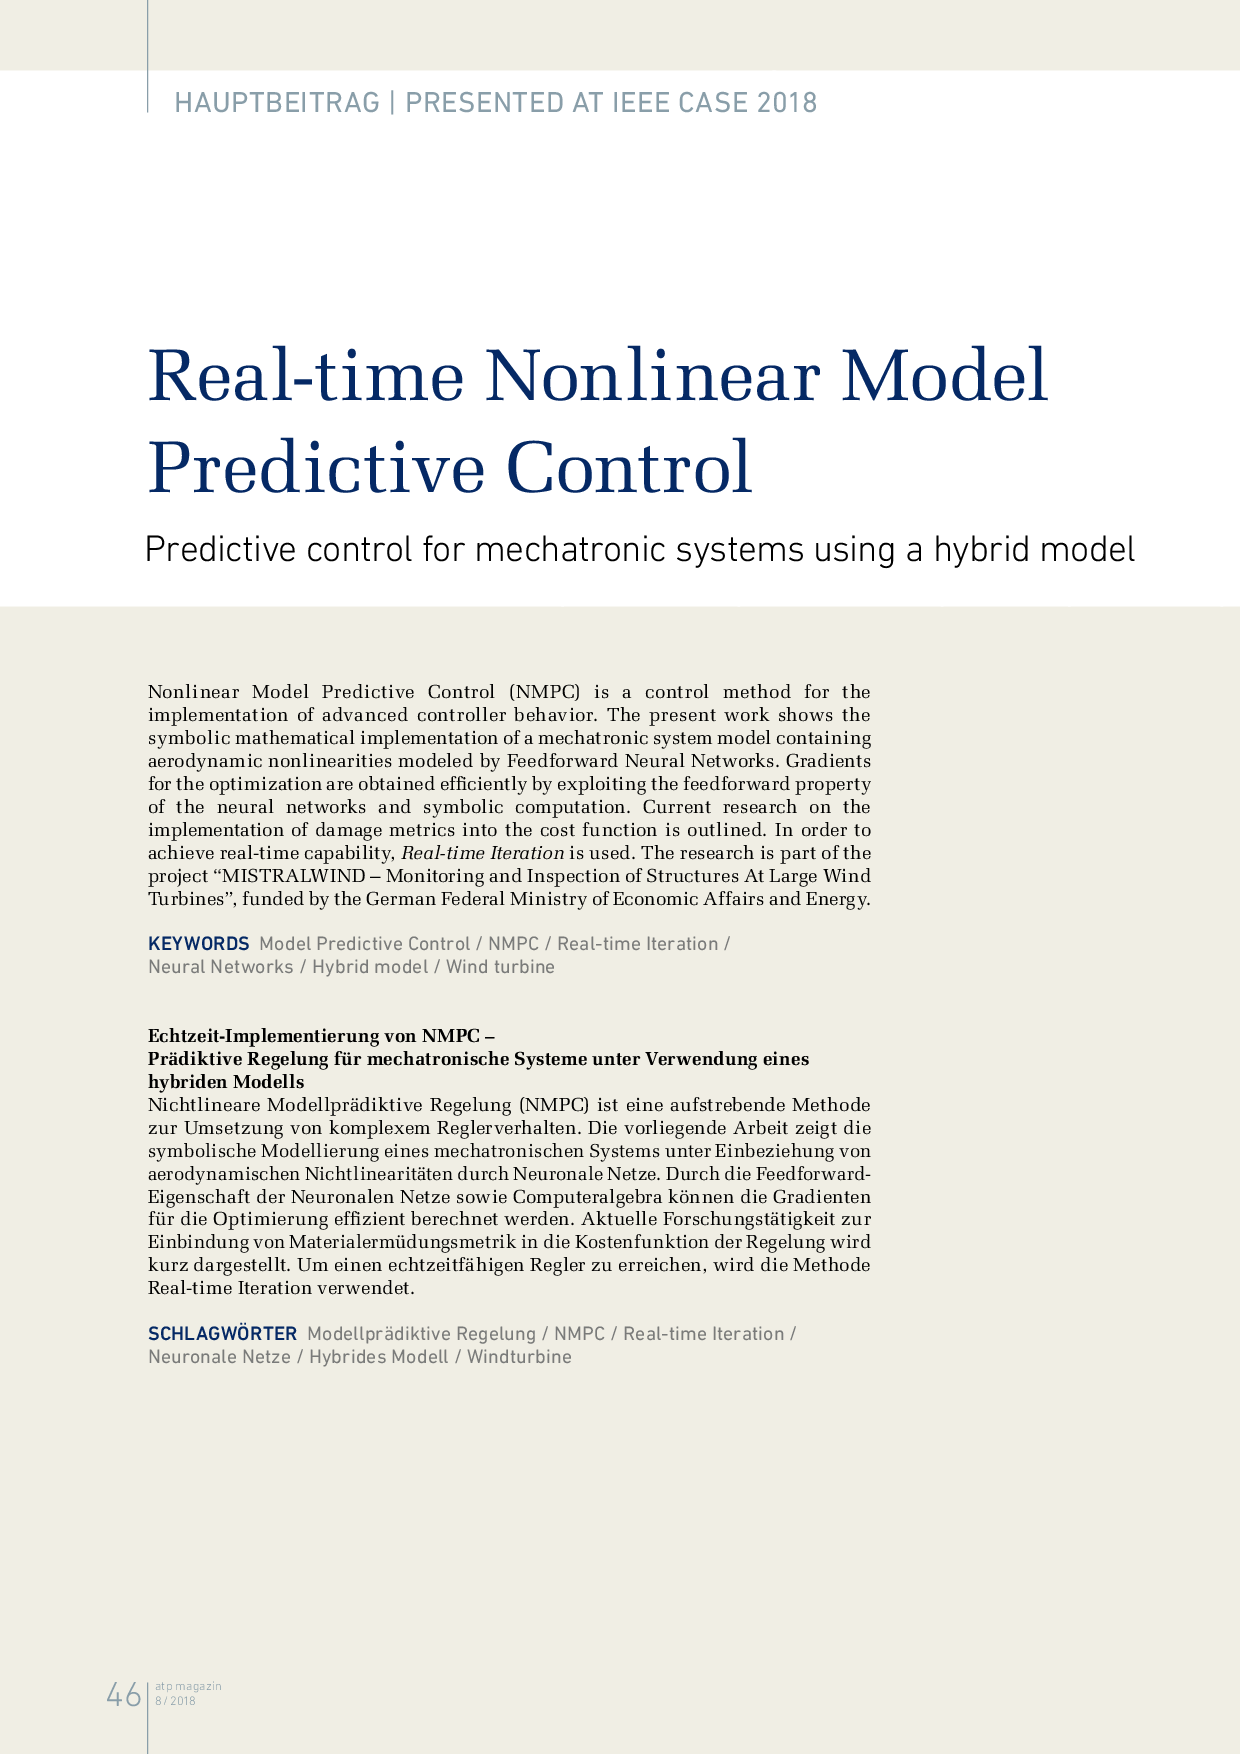 Real-time Nonlinear Model Predictive Control